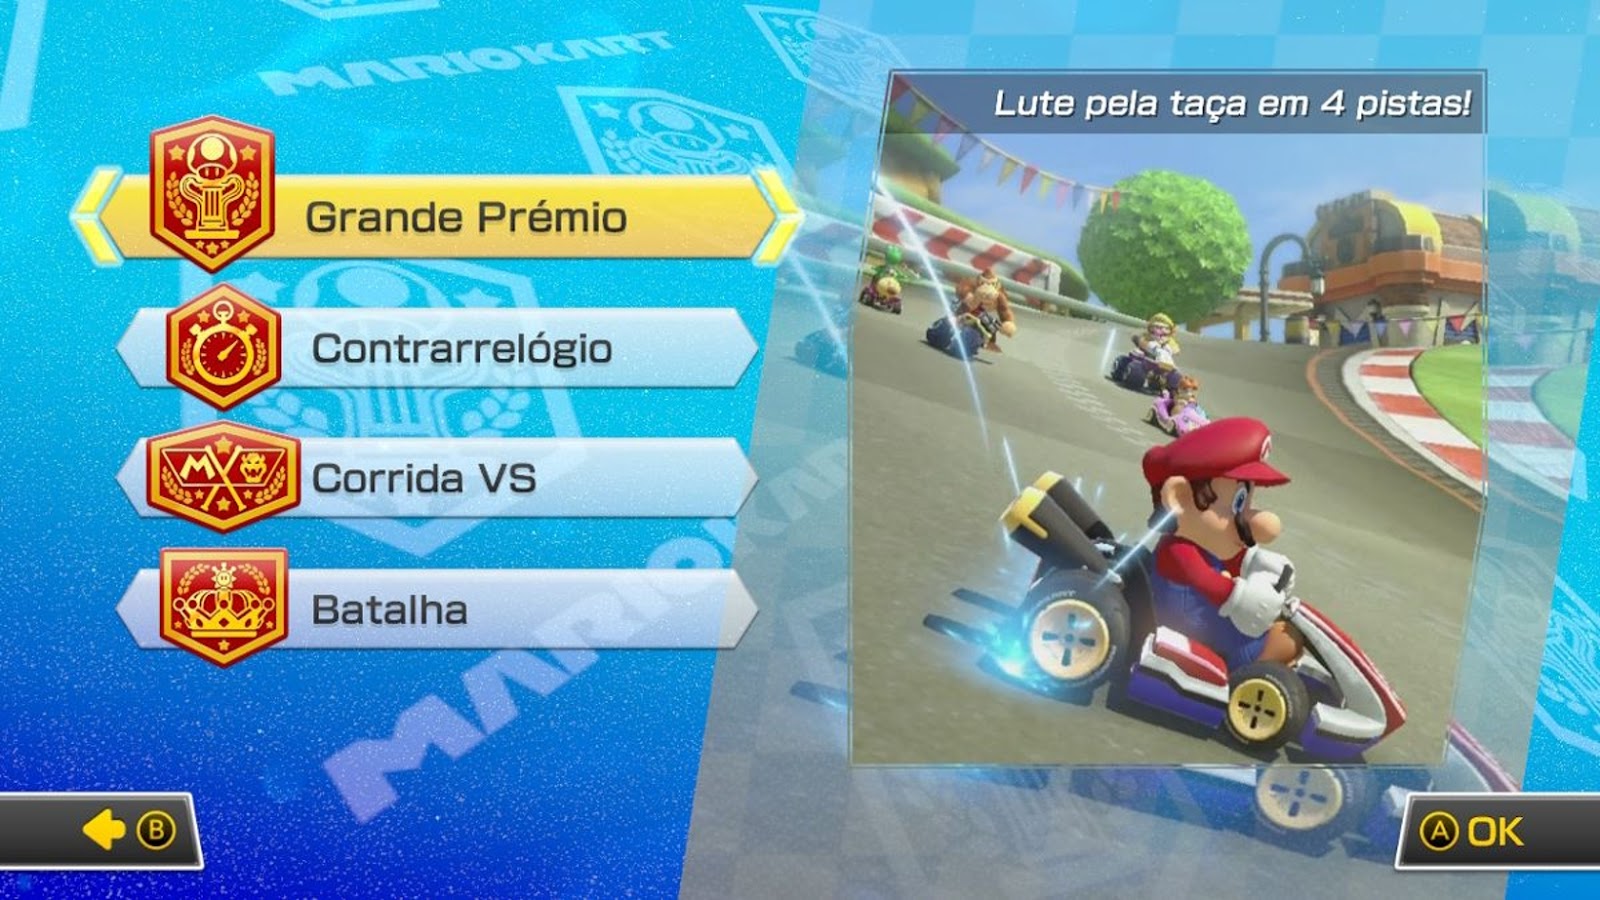 Tips For Using Gold Mario In Mario Kart 8 Deluxe